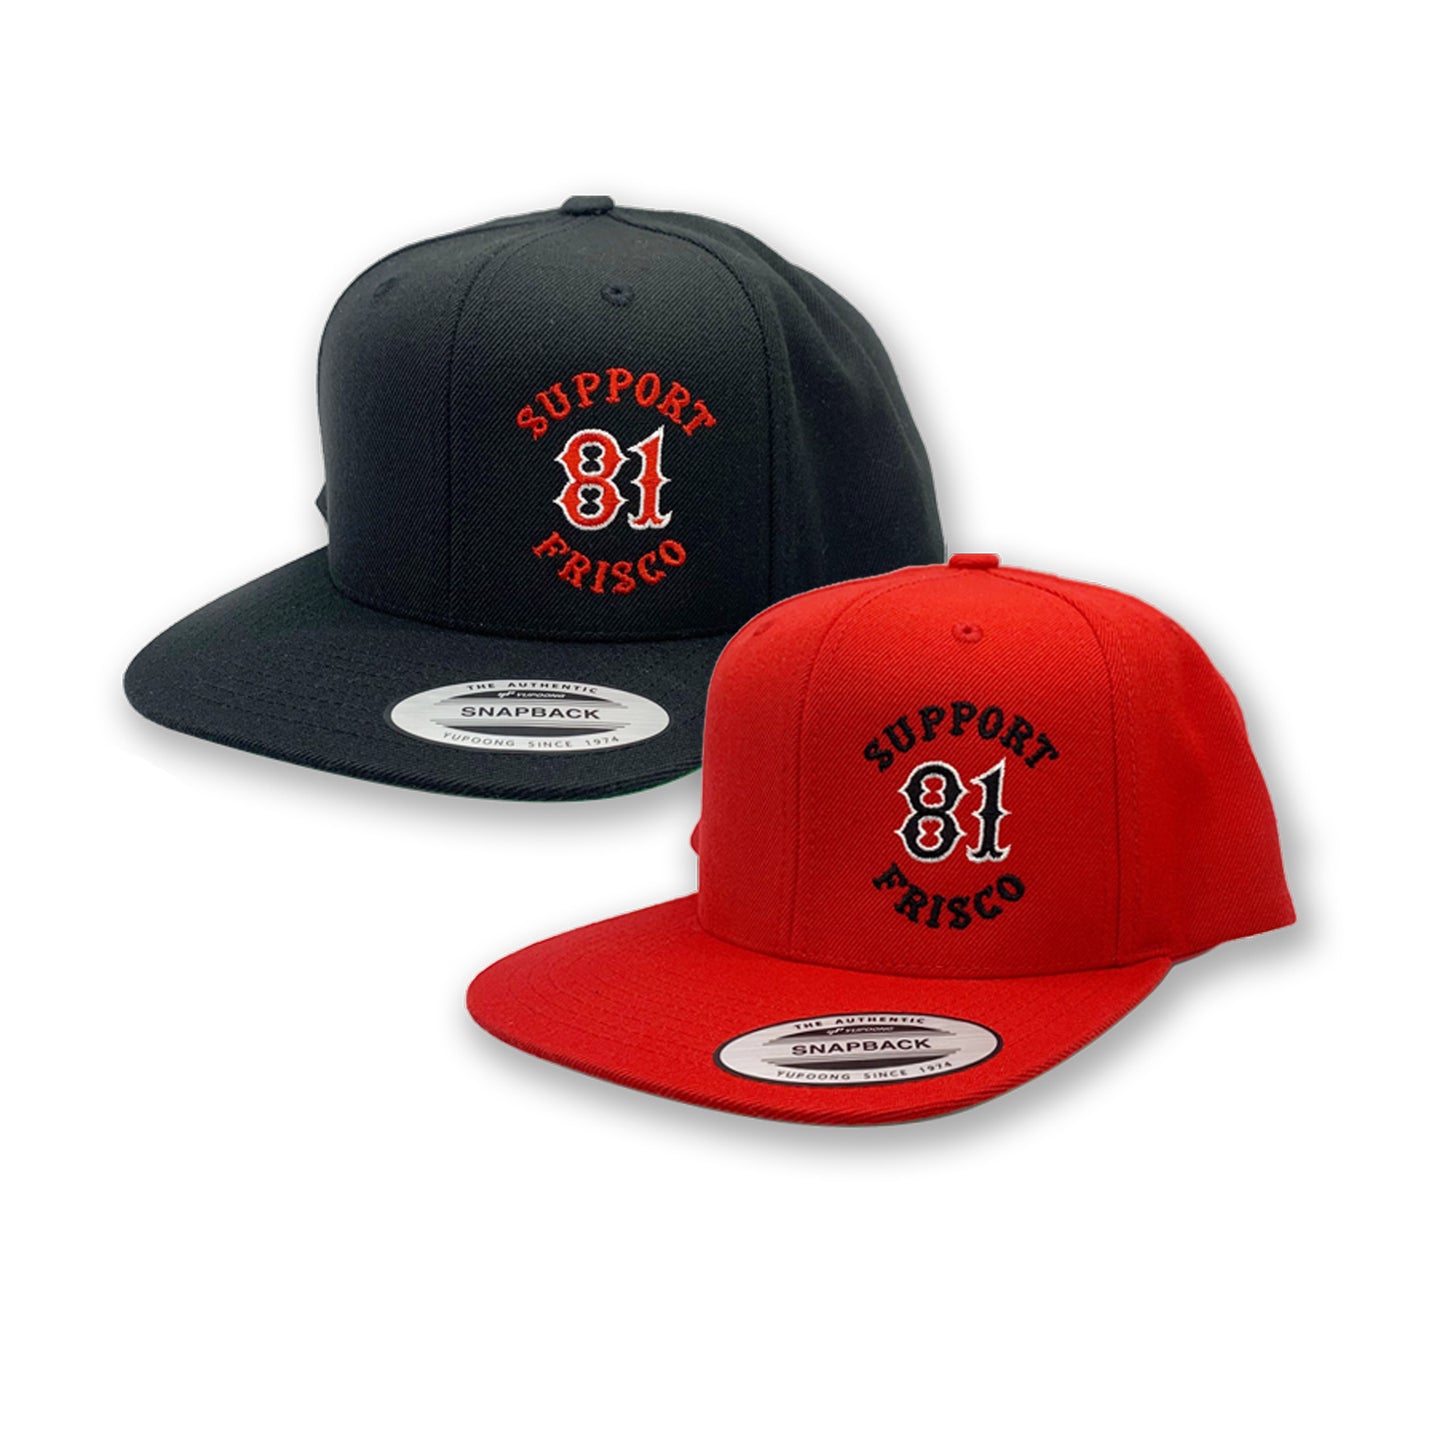 Hat - Black/Red - Snapback - Support 81